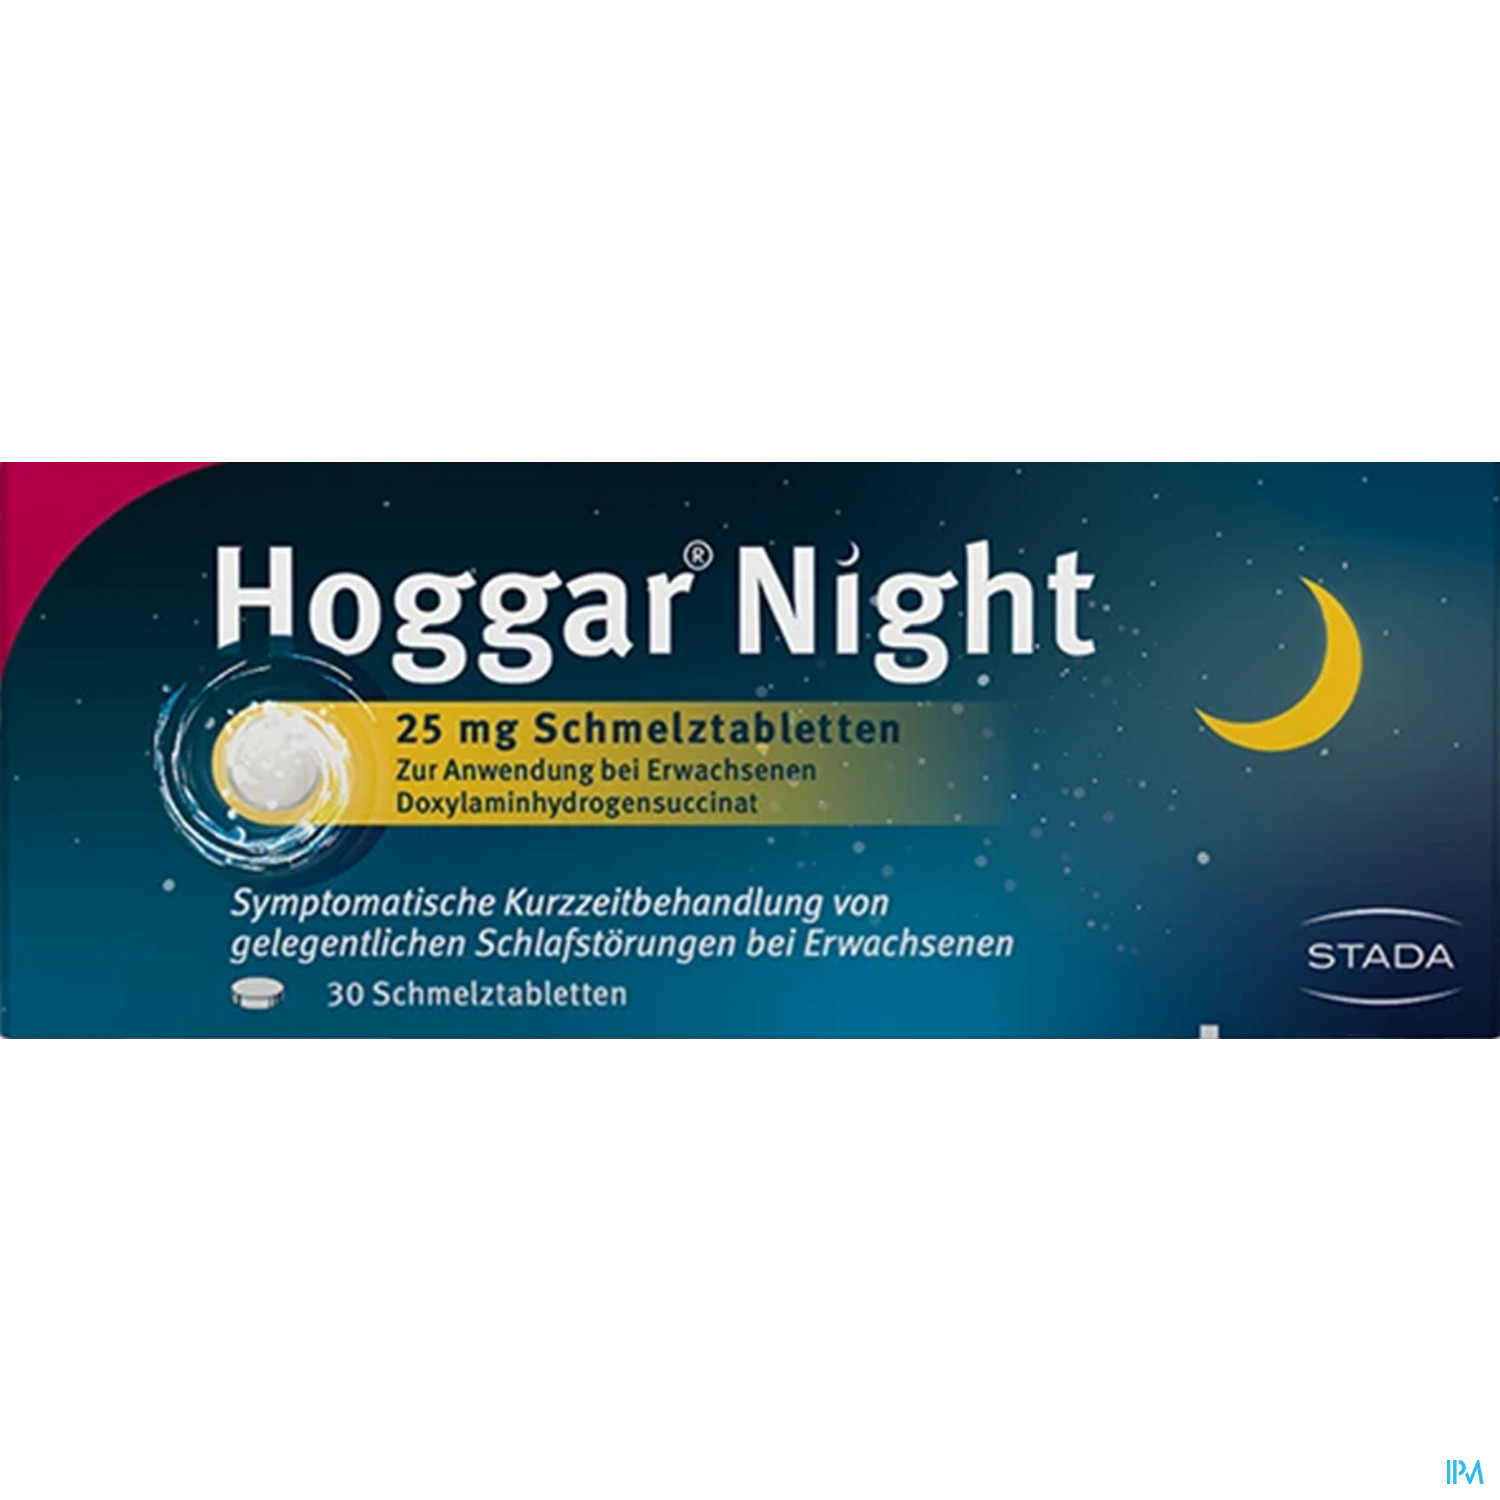 Hoggar Night 25 mg - Schmelztabletten